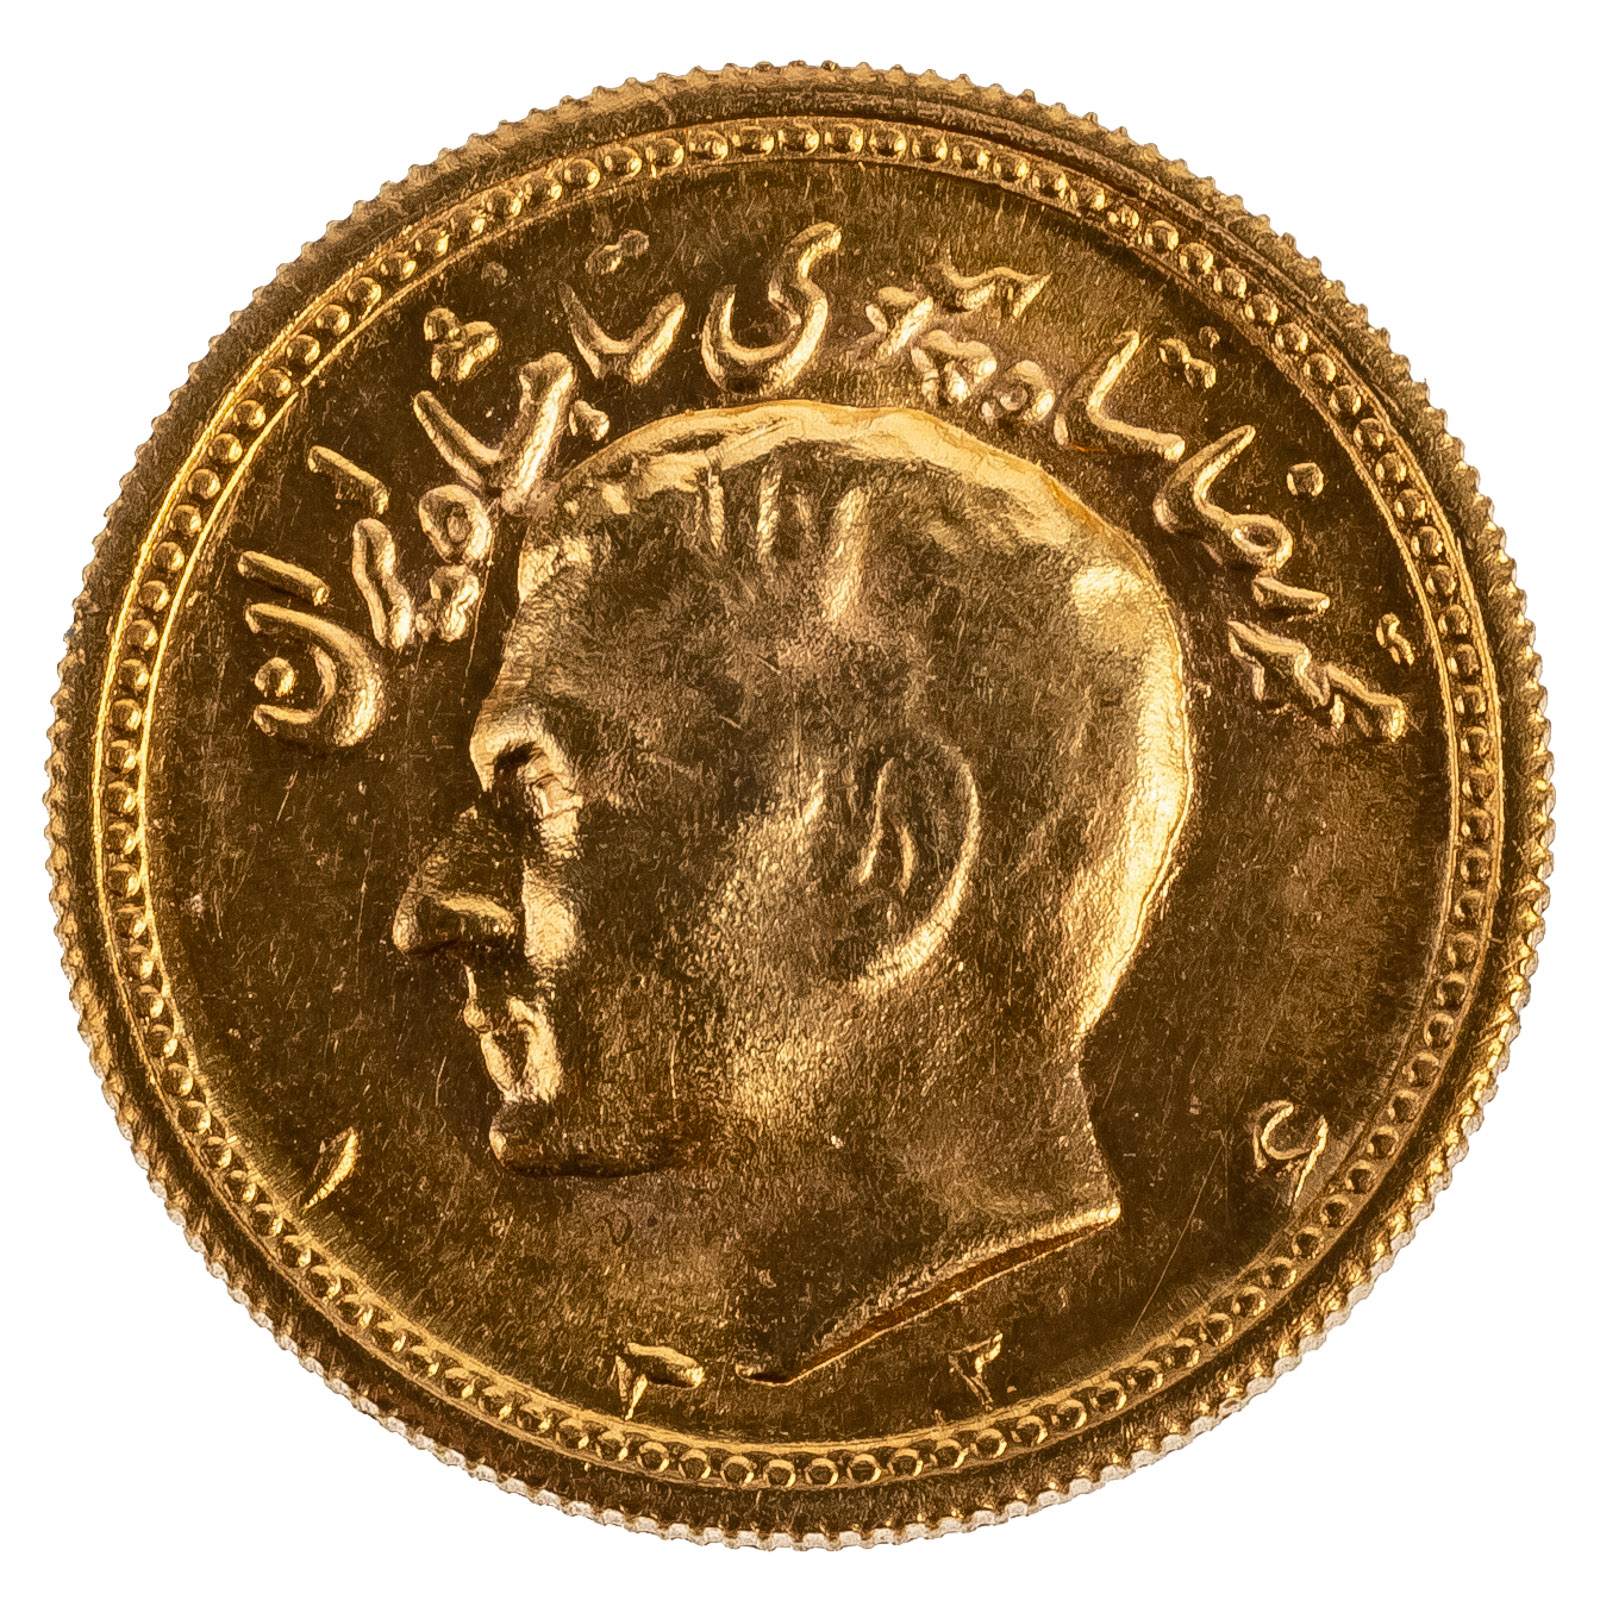 IRAN - GOLD ONE PAHLAVI (1336)